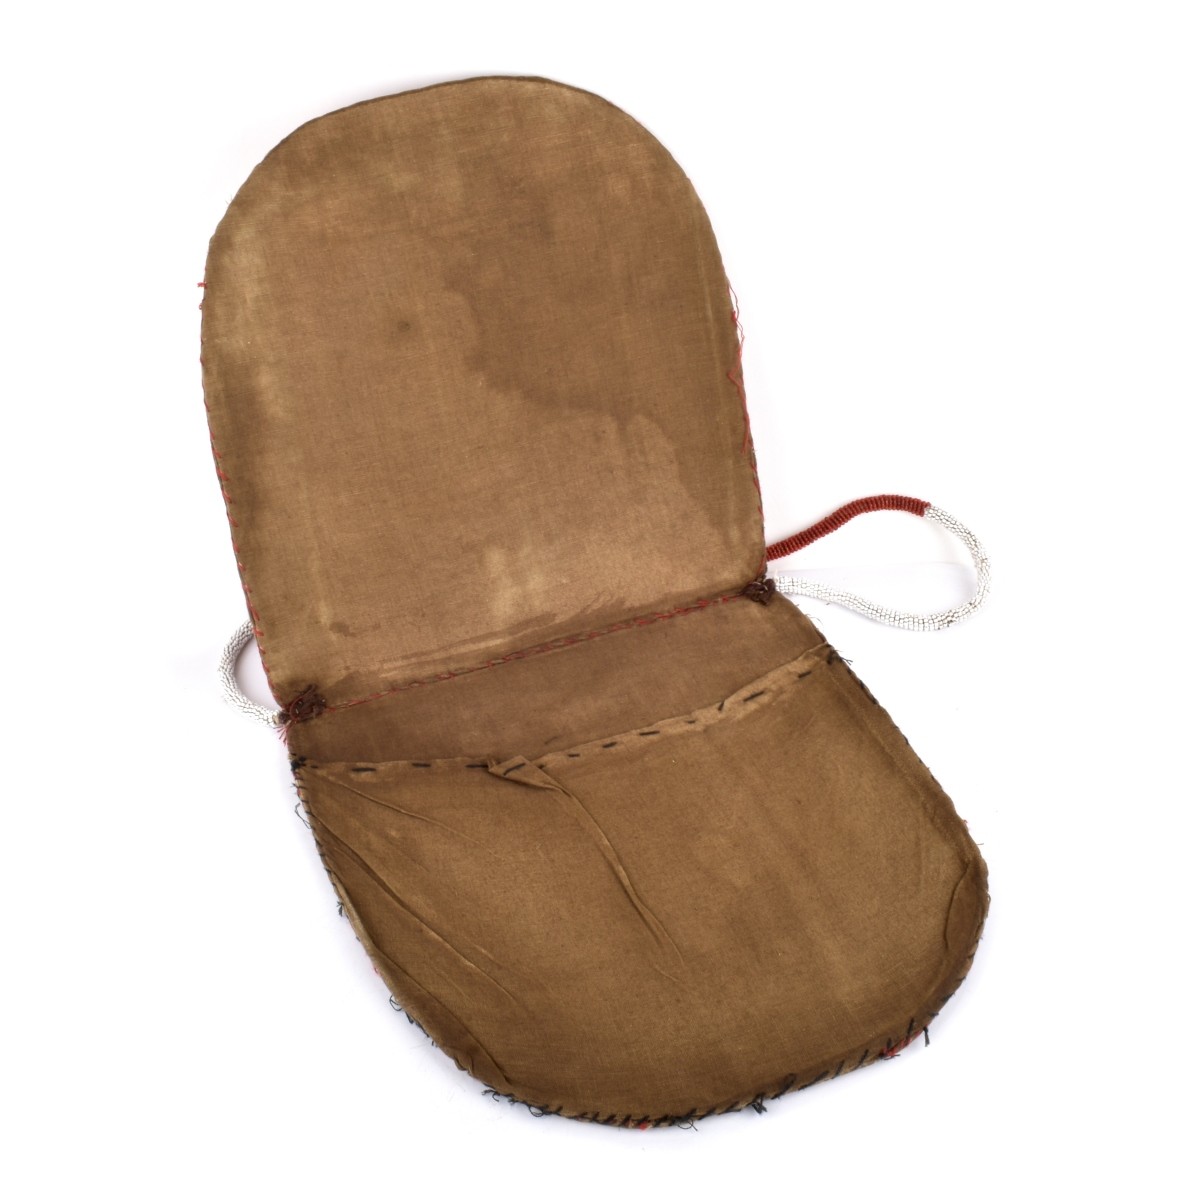 Early 20th C. Native American Bag